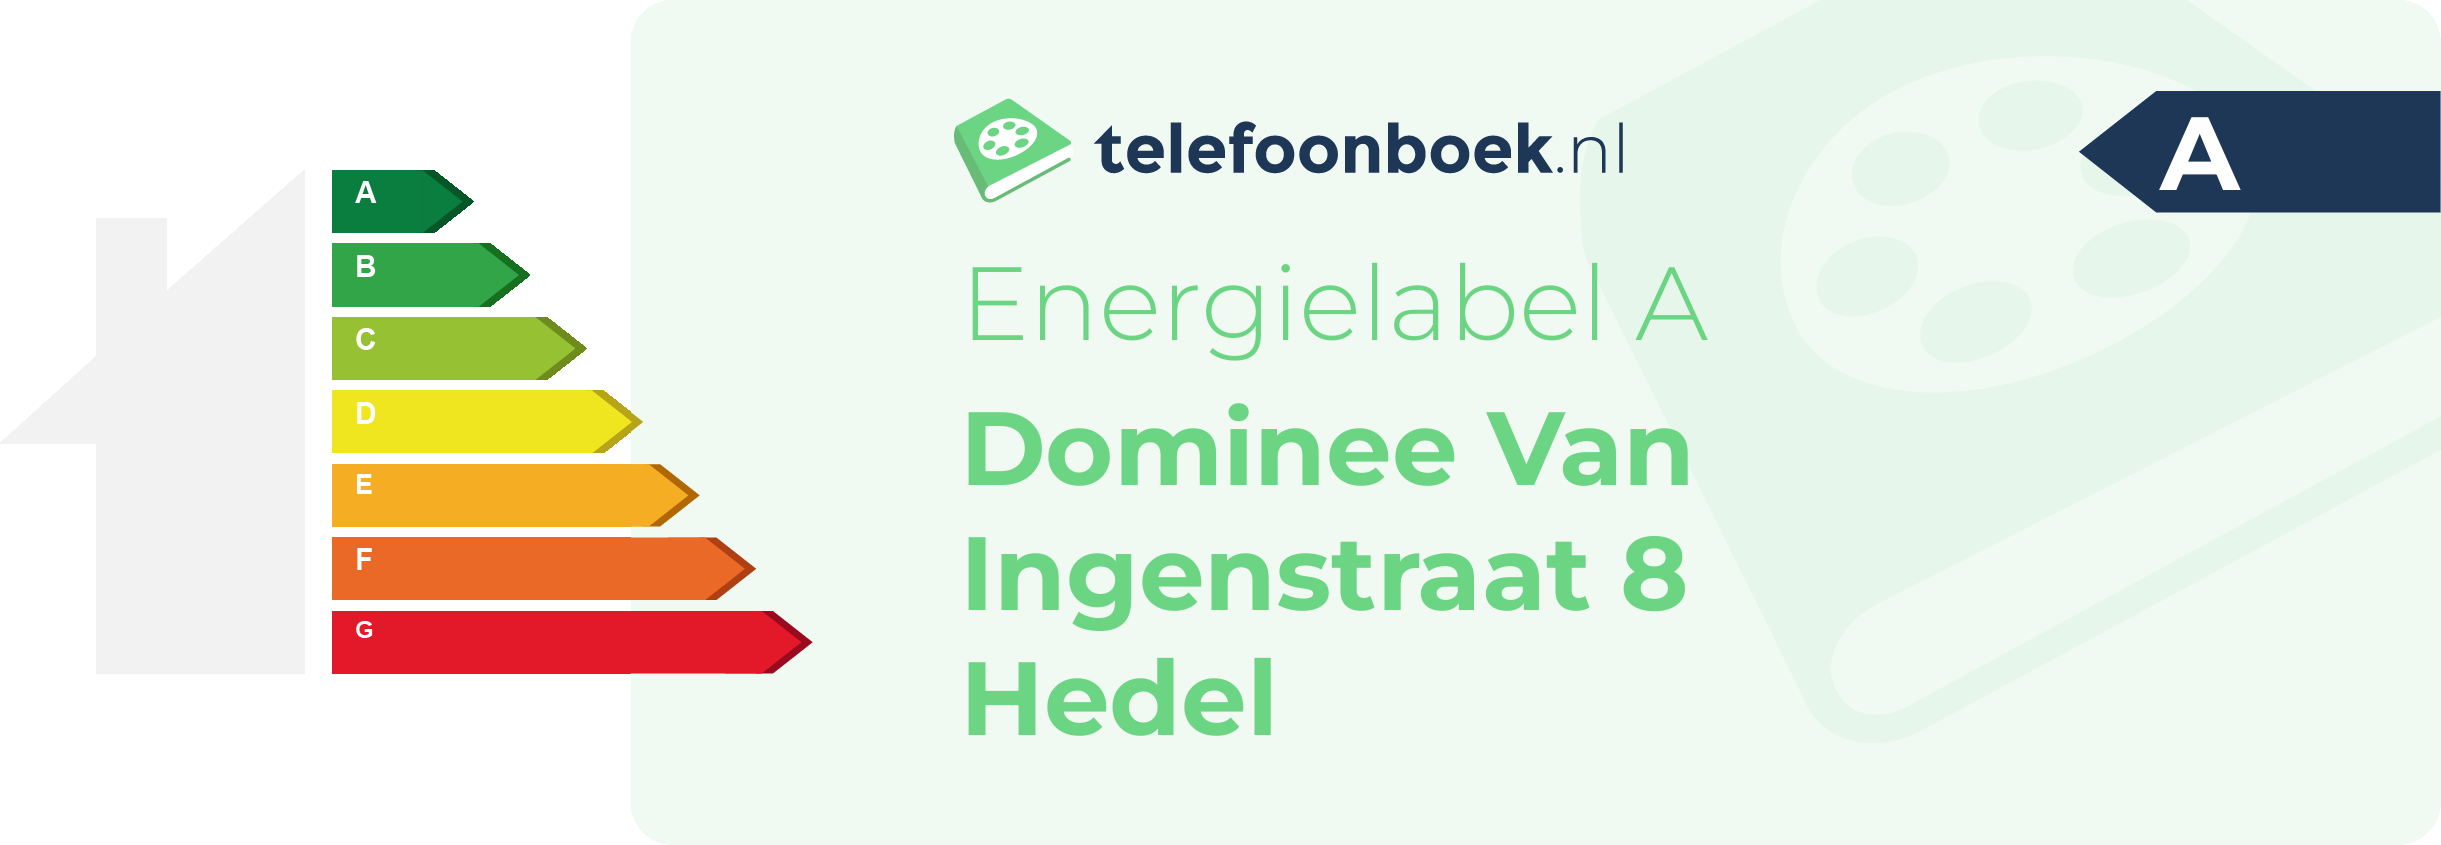 Energielabel Dominee Van Ingenstraat 8 Hedel